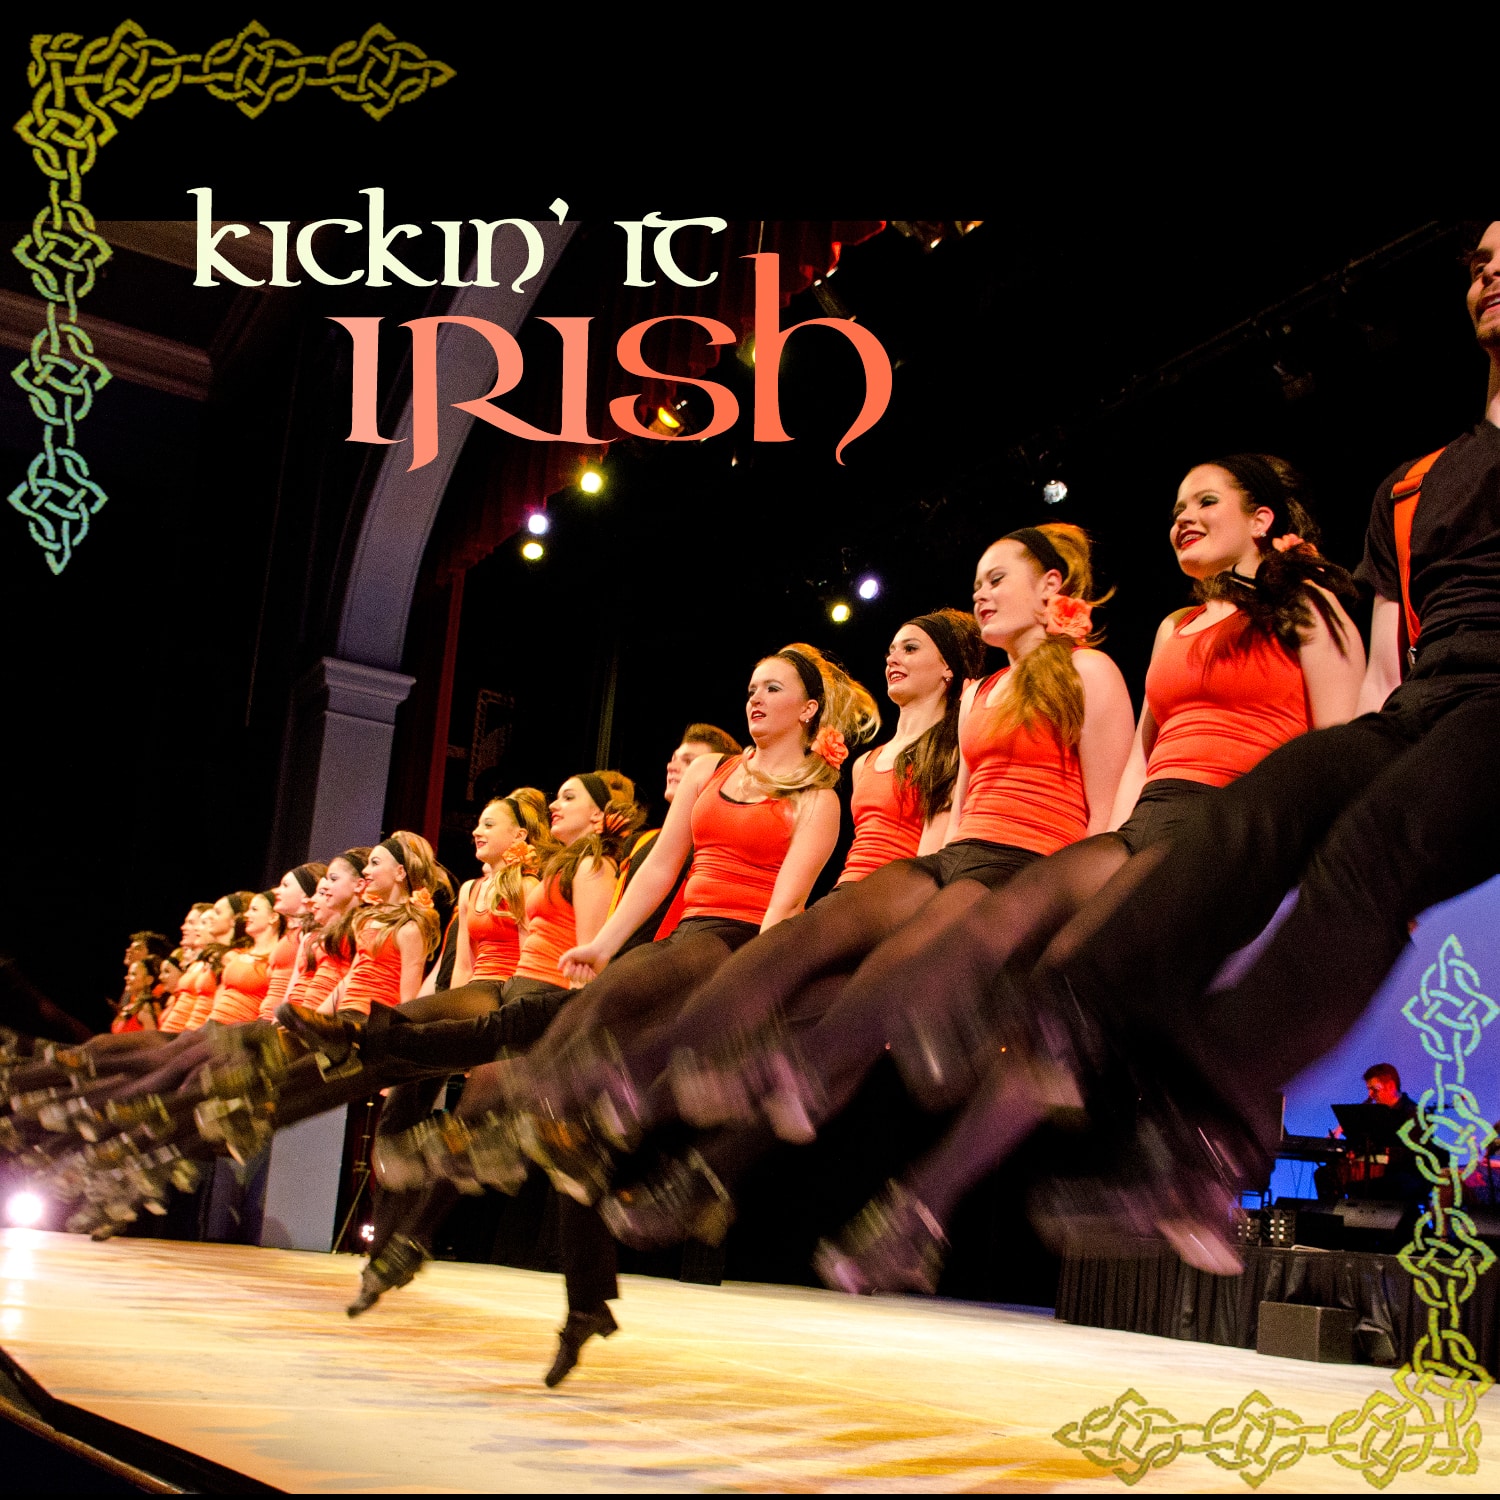 Celebrate St. Patrick's day with Kickin' It Irish